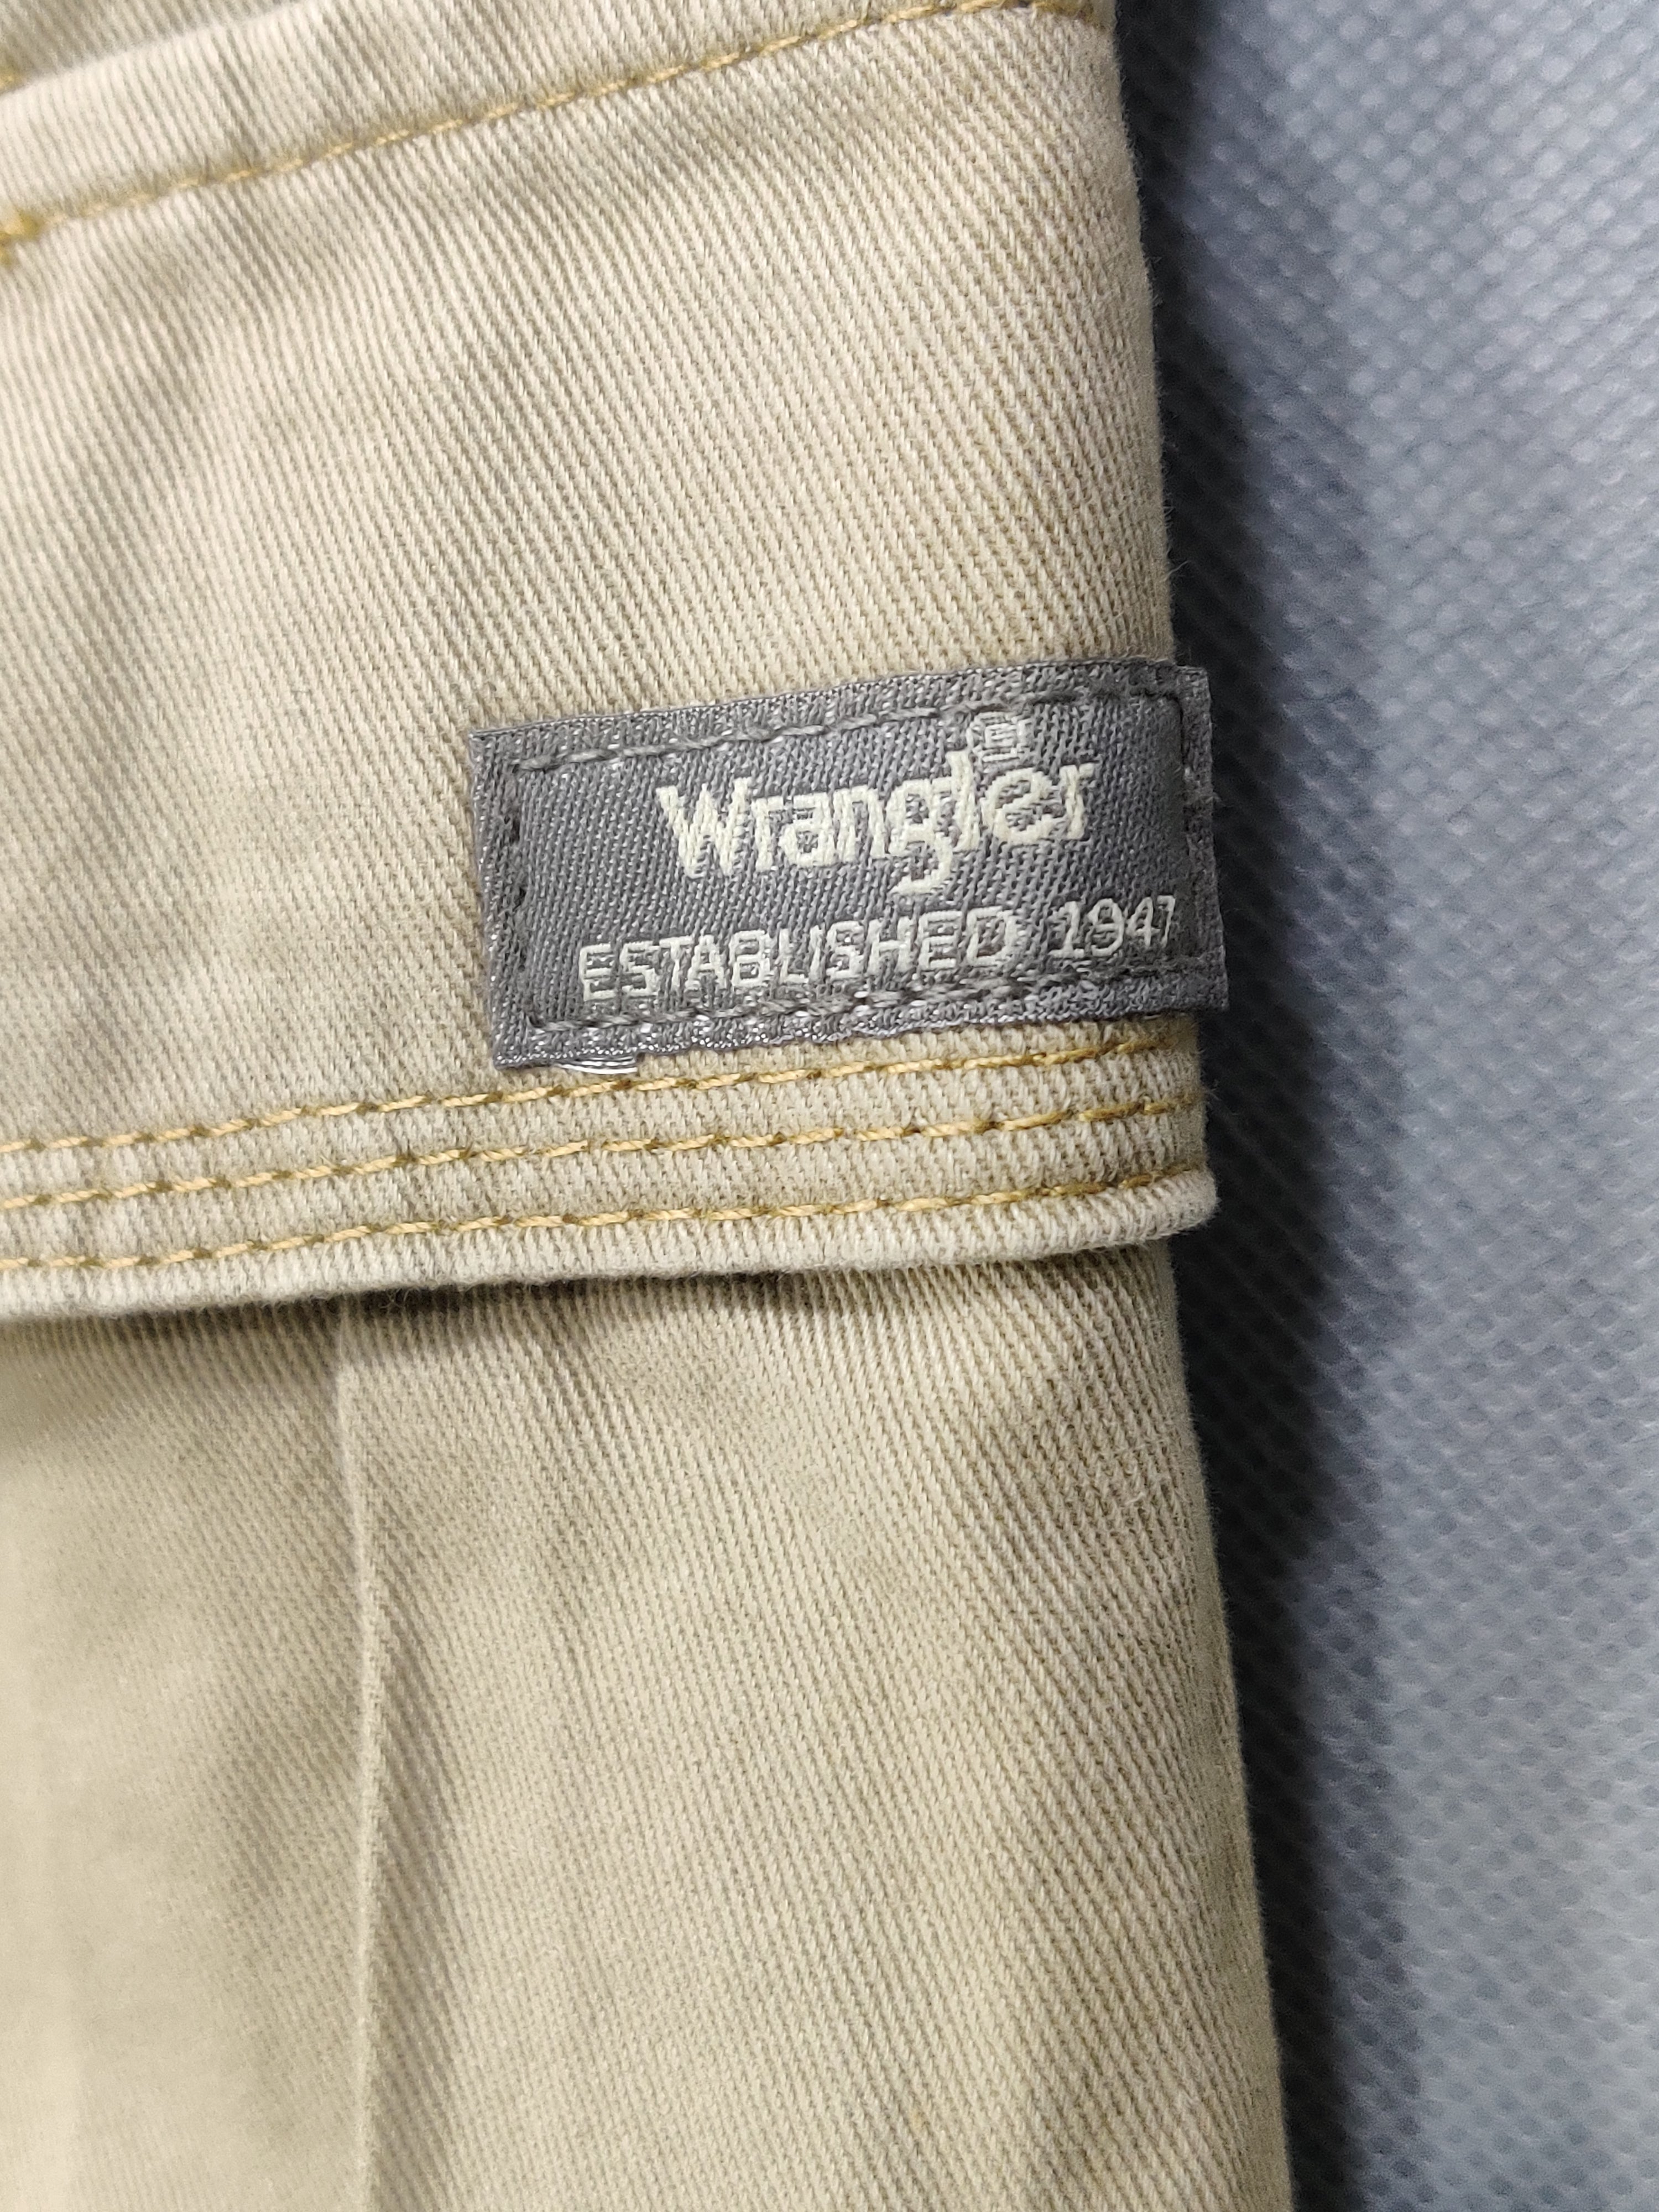 Wrangler Branded Original Cotton For Men Cargo Pant